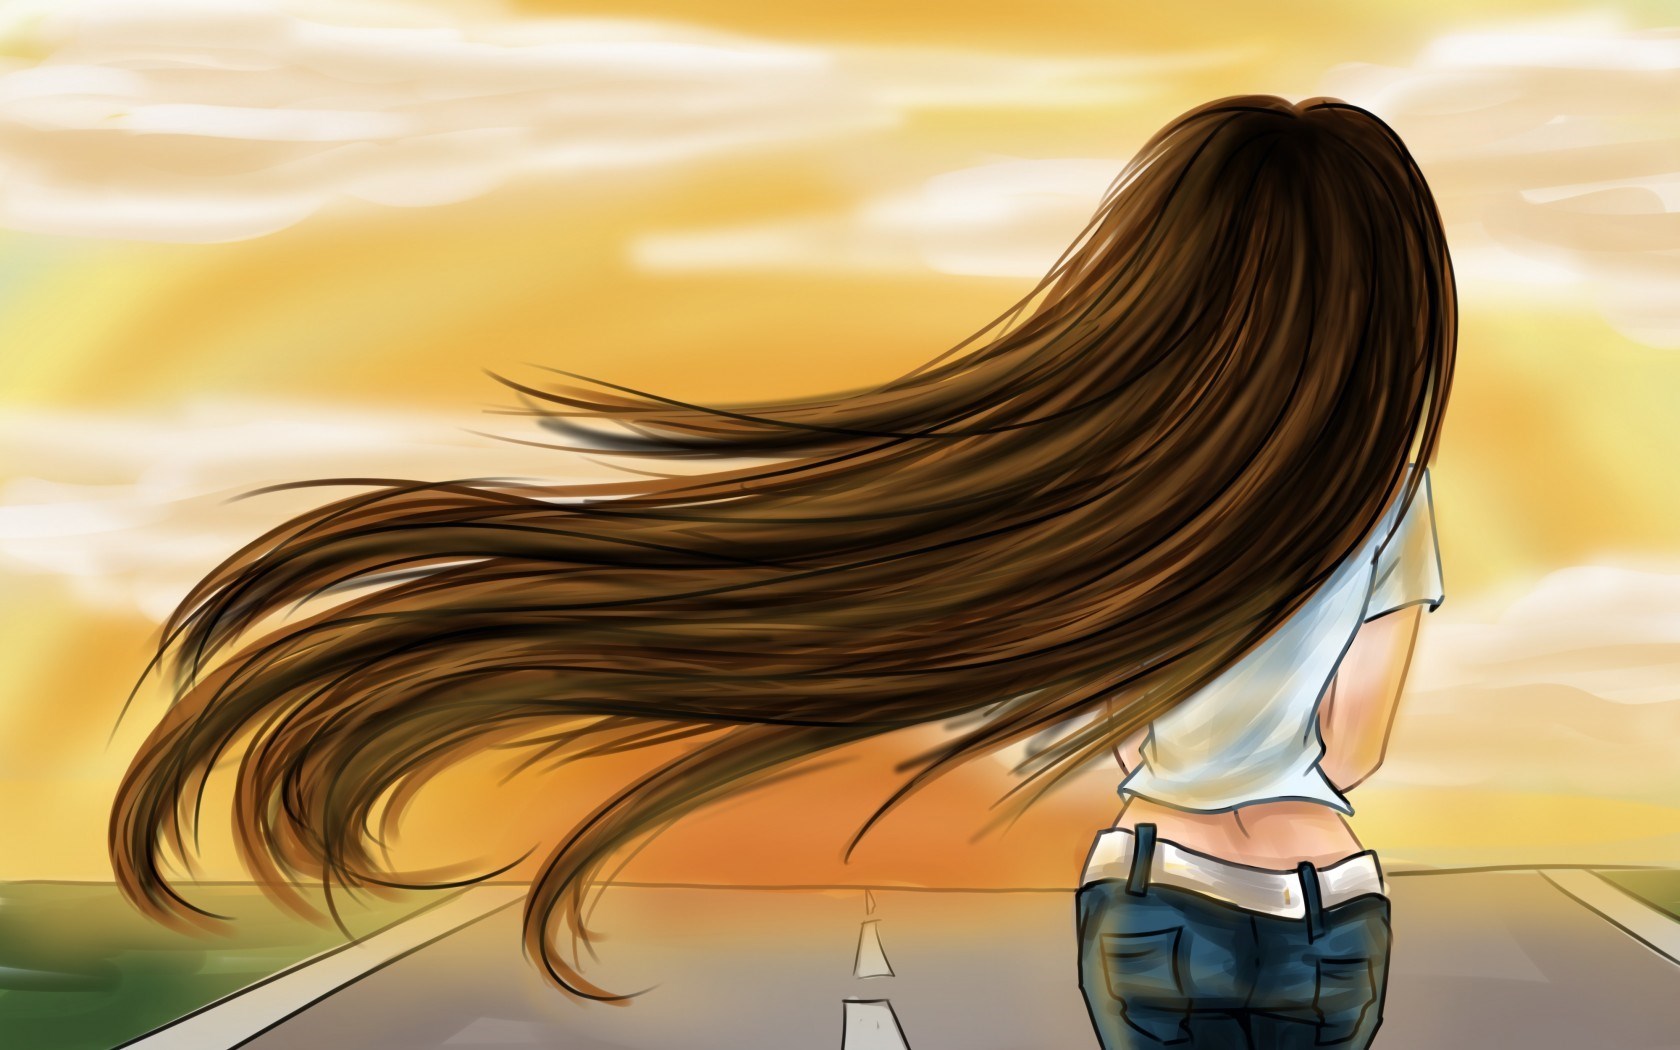 Cartoon Girl With Long Hair - 1680x1050 Wallpaper 